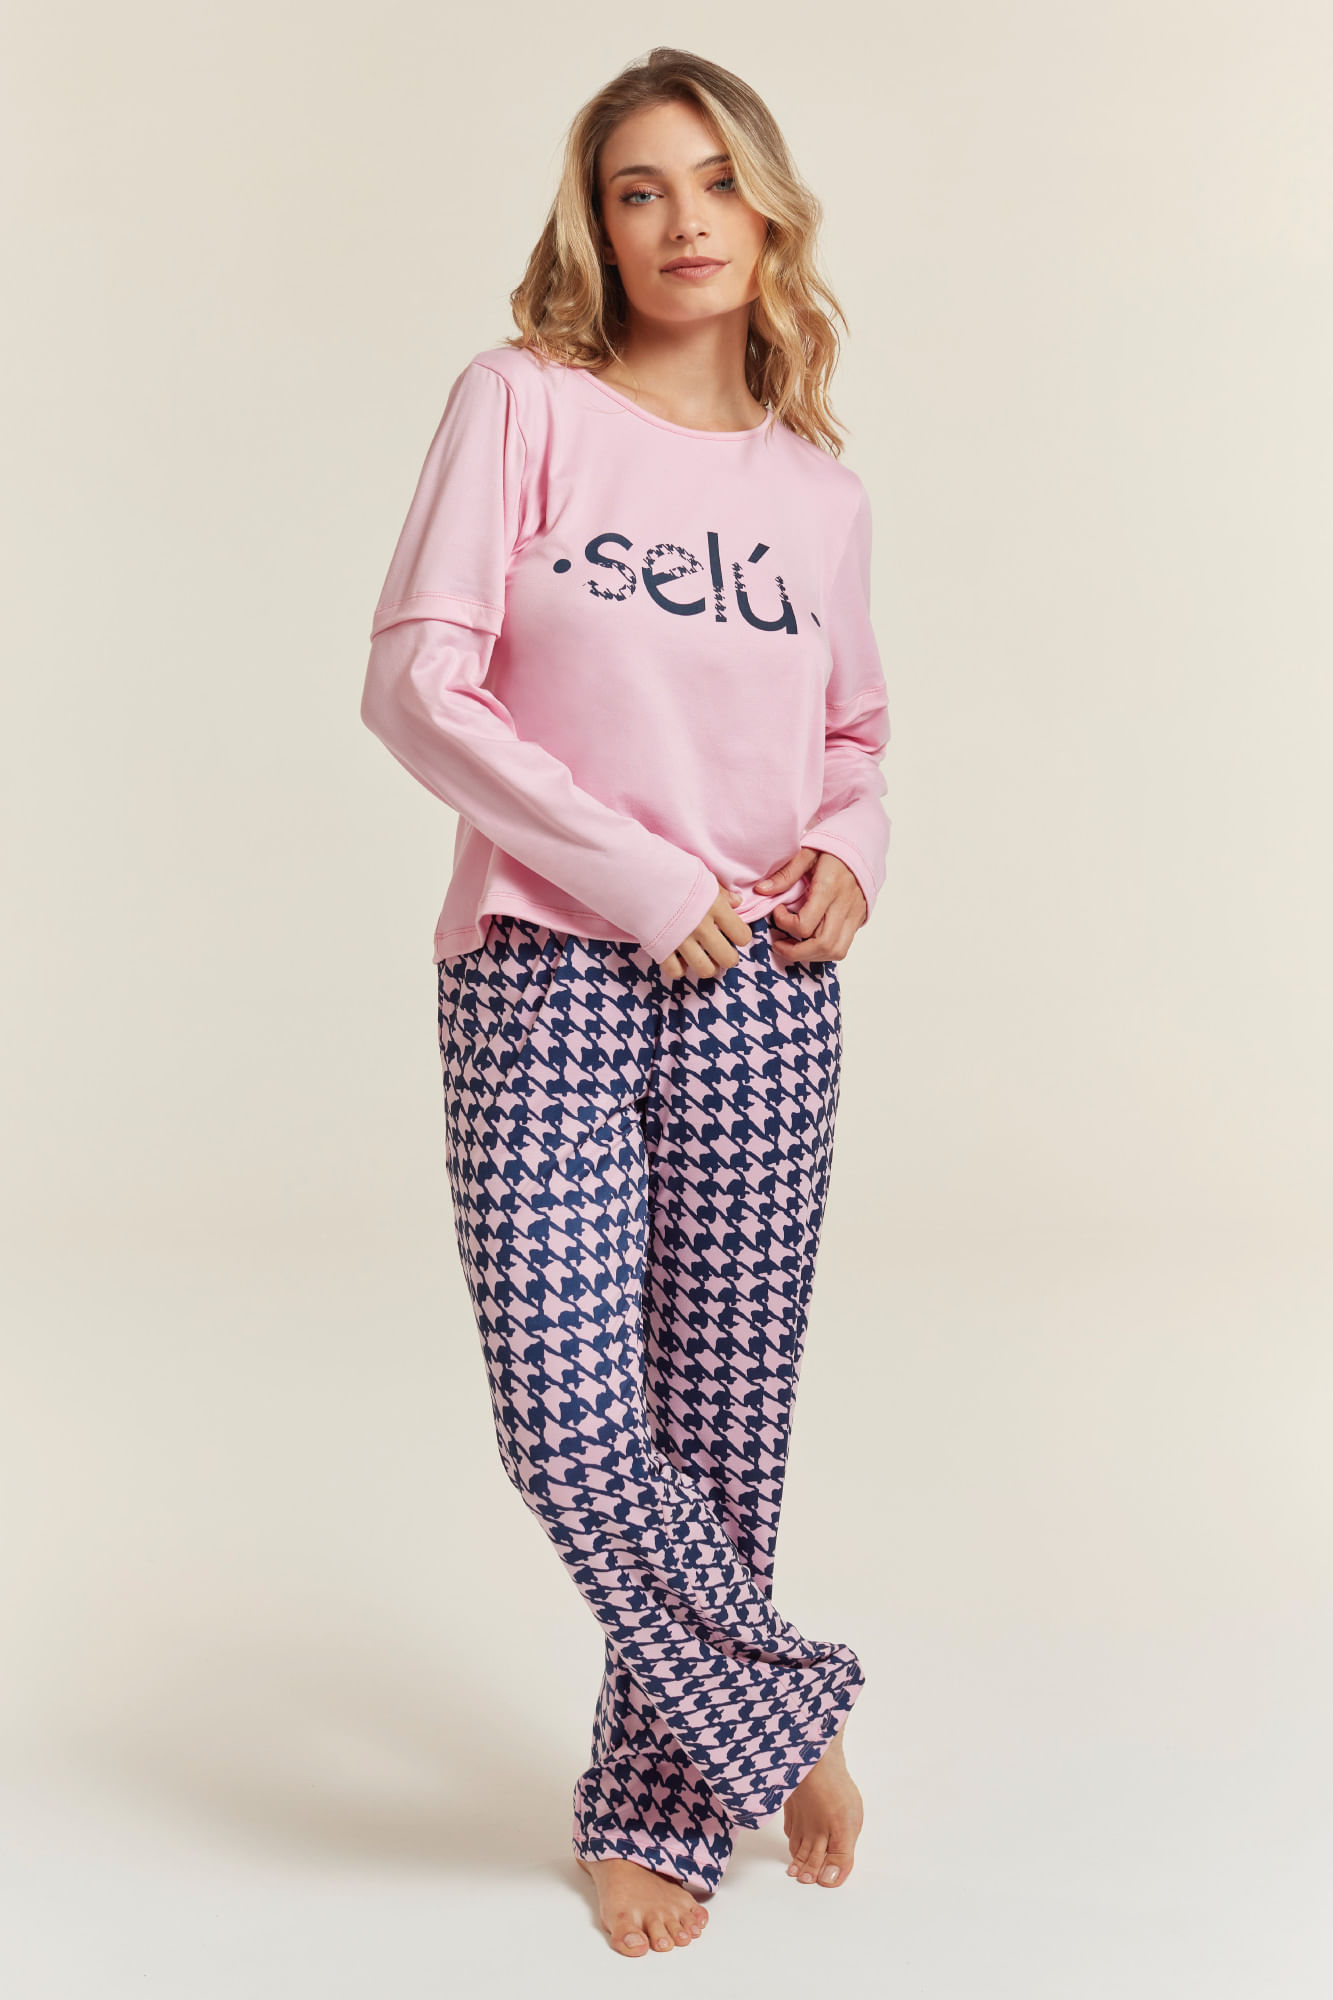 Selú - Pijama de Andalucía